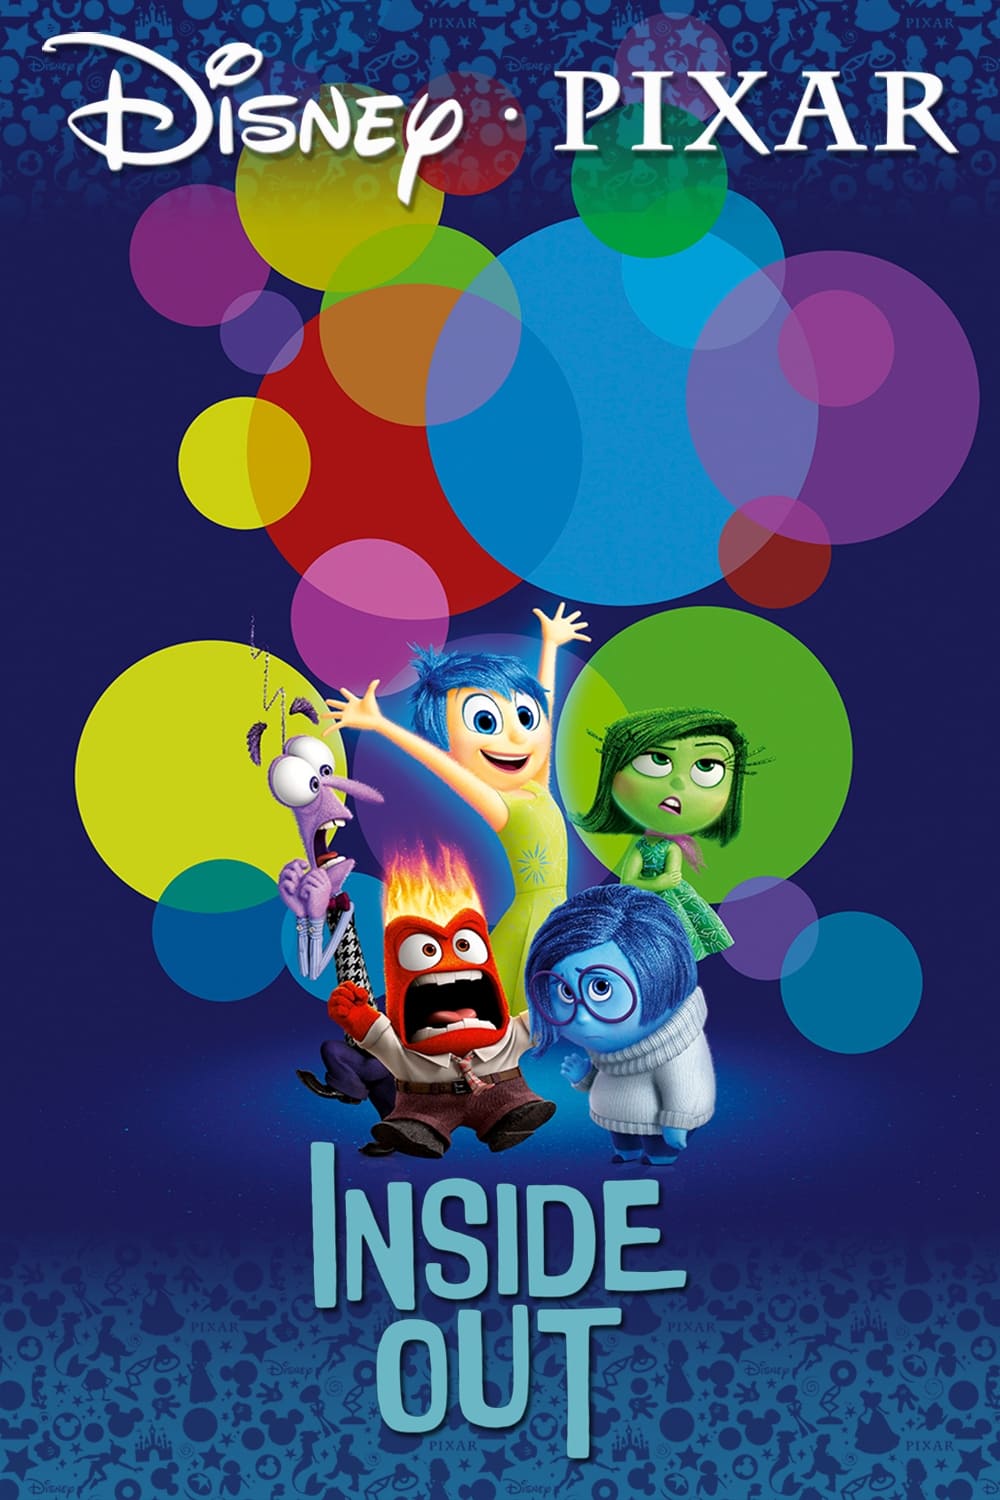 Inside Out 2015 มหัศจรรย์อารมณ์อลเวง movie2uhd